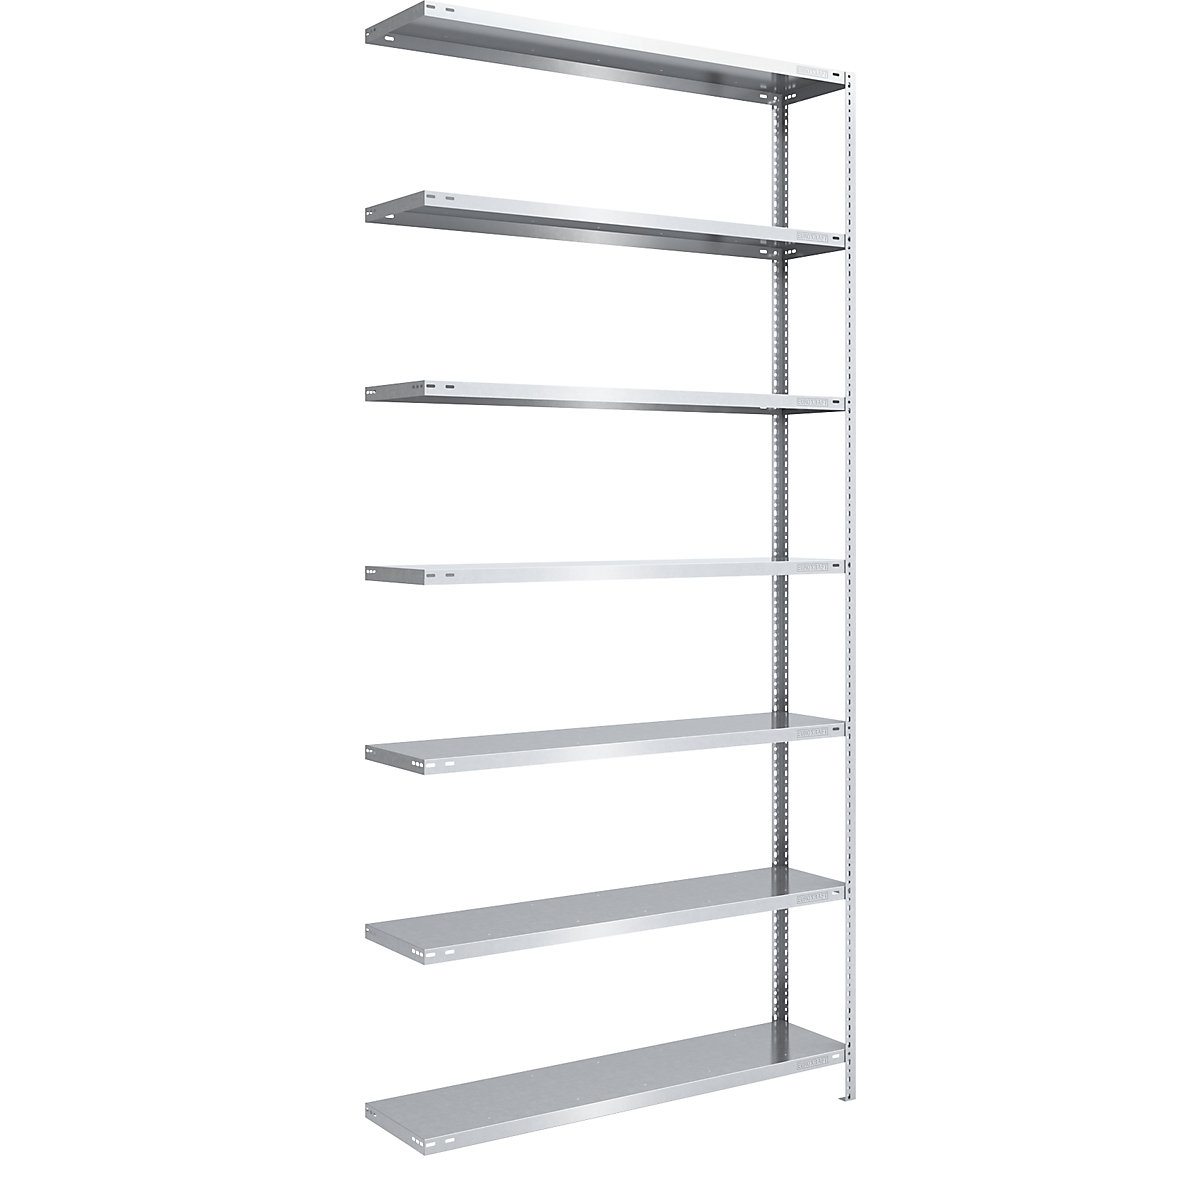 Bolt-together shelf unit, light duty, zinc plated – eurokraft pro, shelf unit height 3000 mm, shelf width 1300 mm, depth 400 mm, extension shelf unit-8